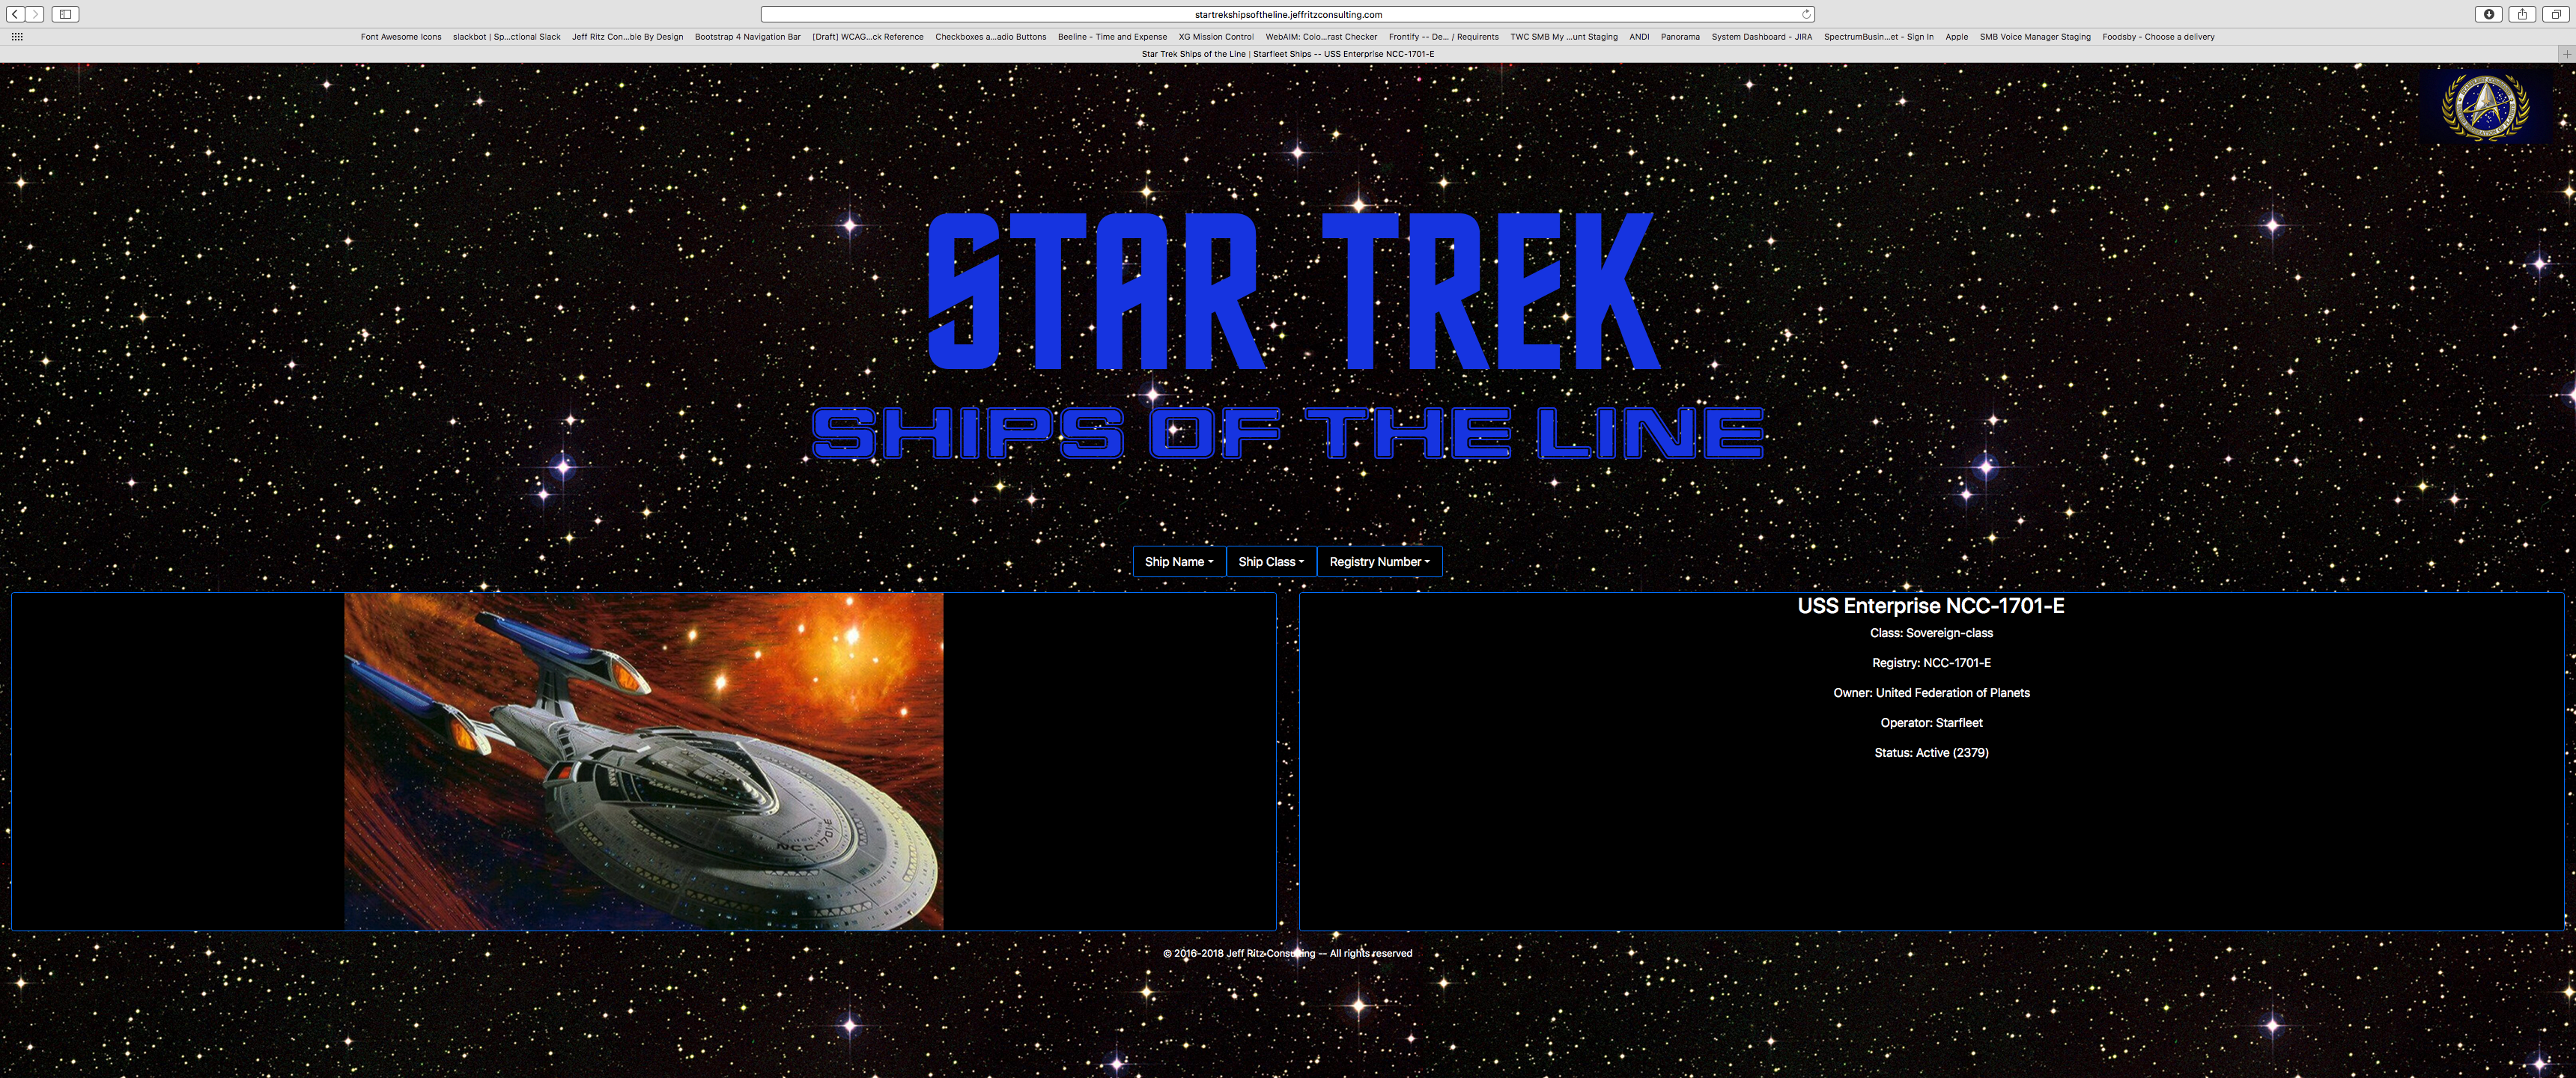 Star Trek Ships of the Line Prototype